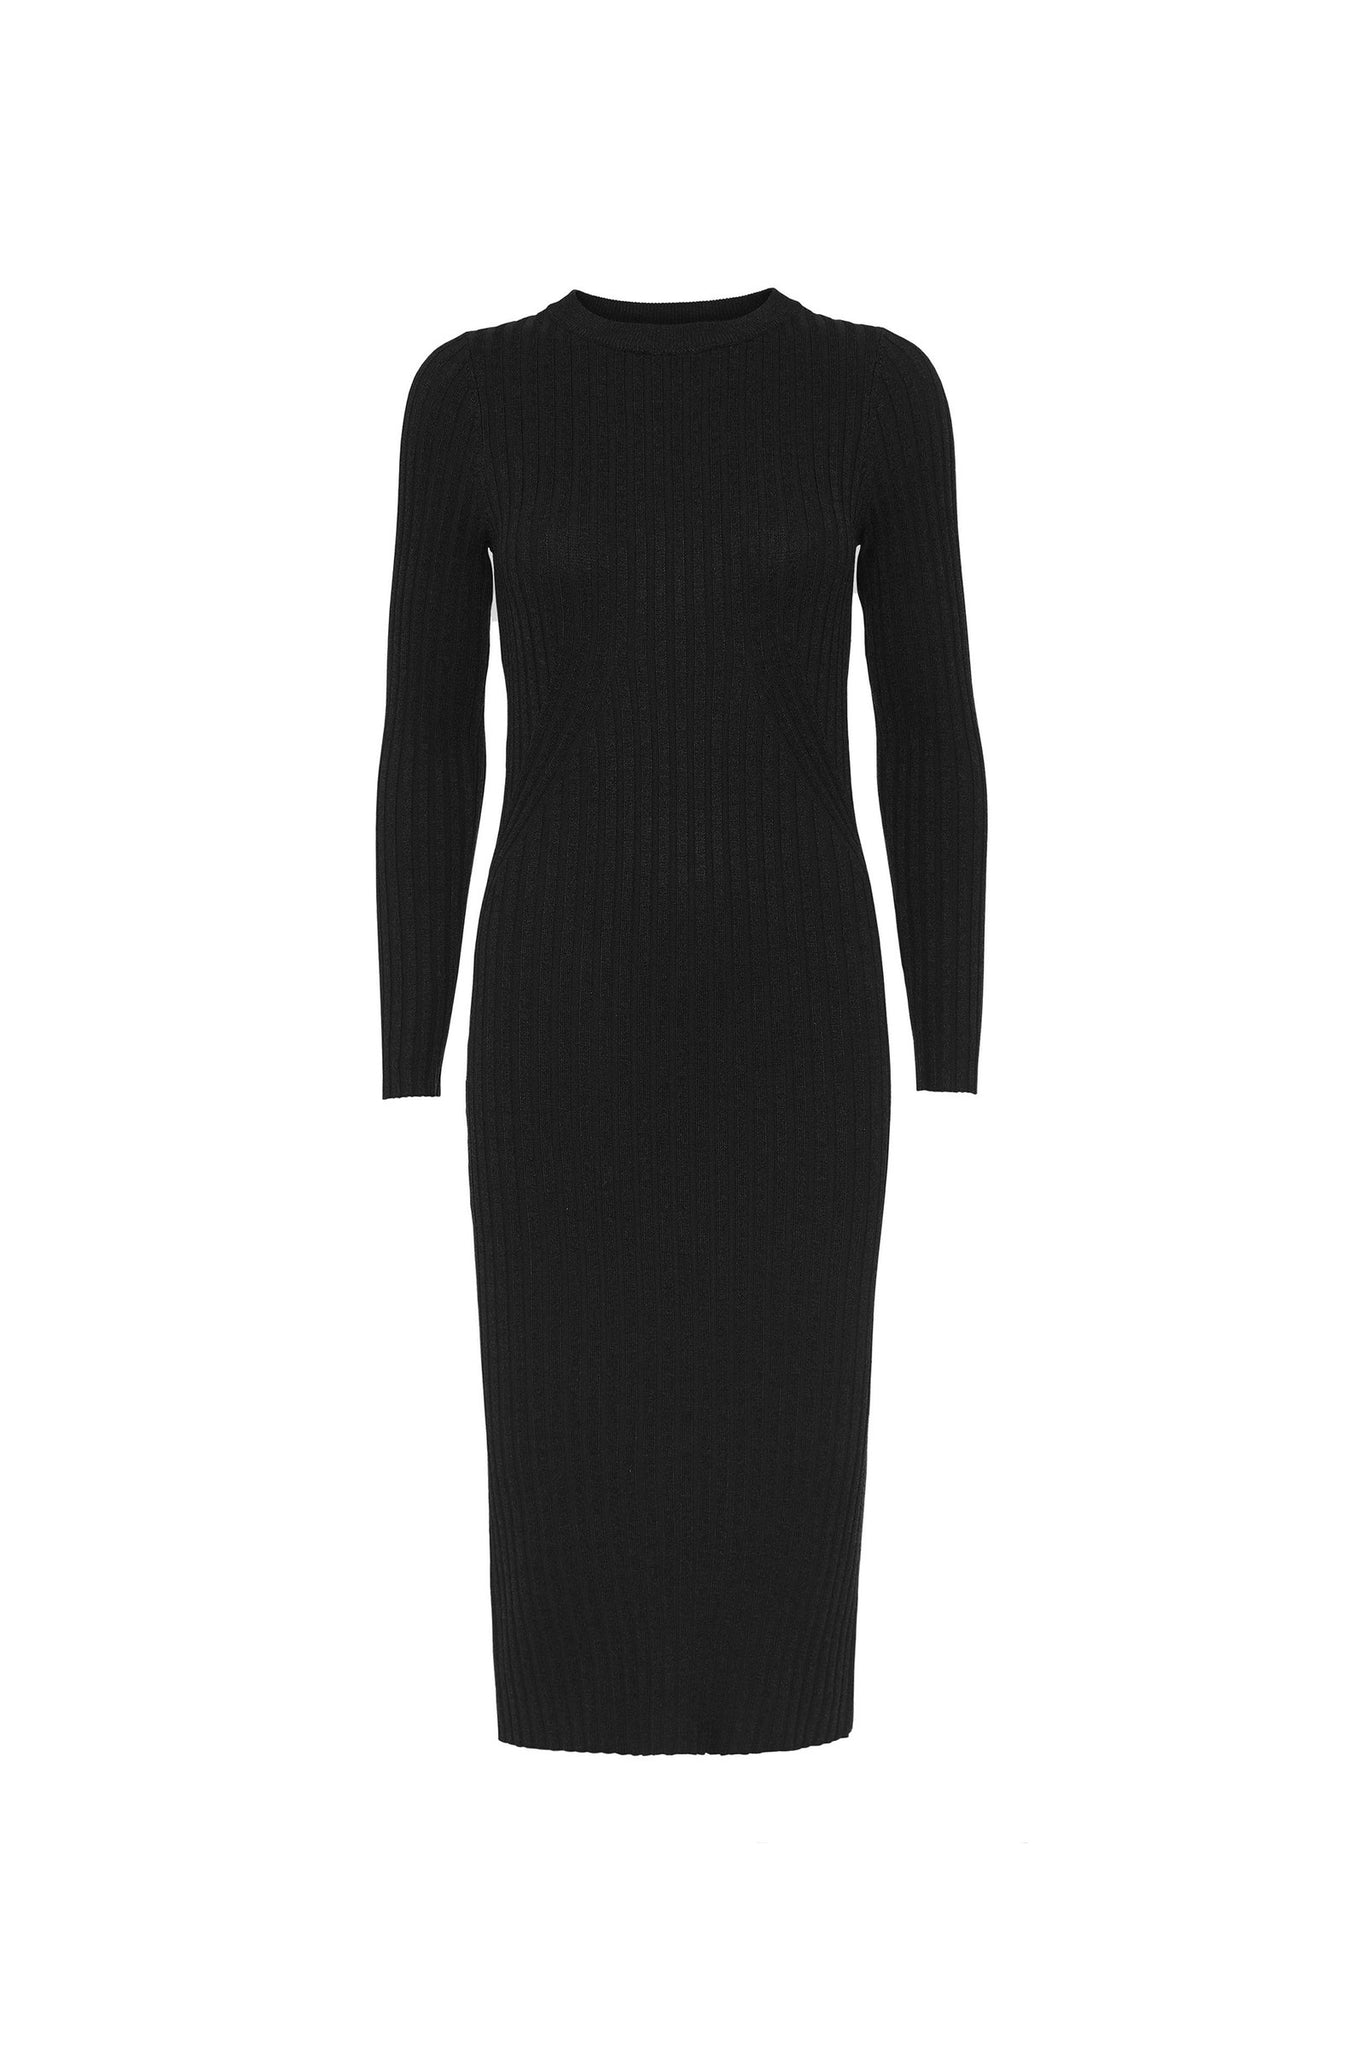 Karlina o-neck long sleeved dress in black